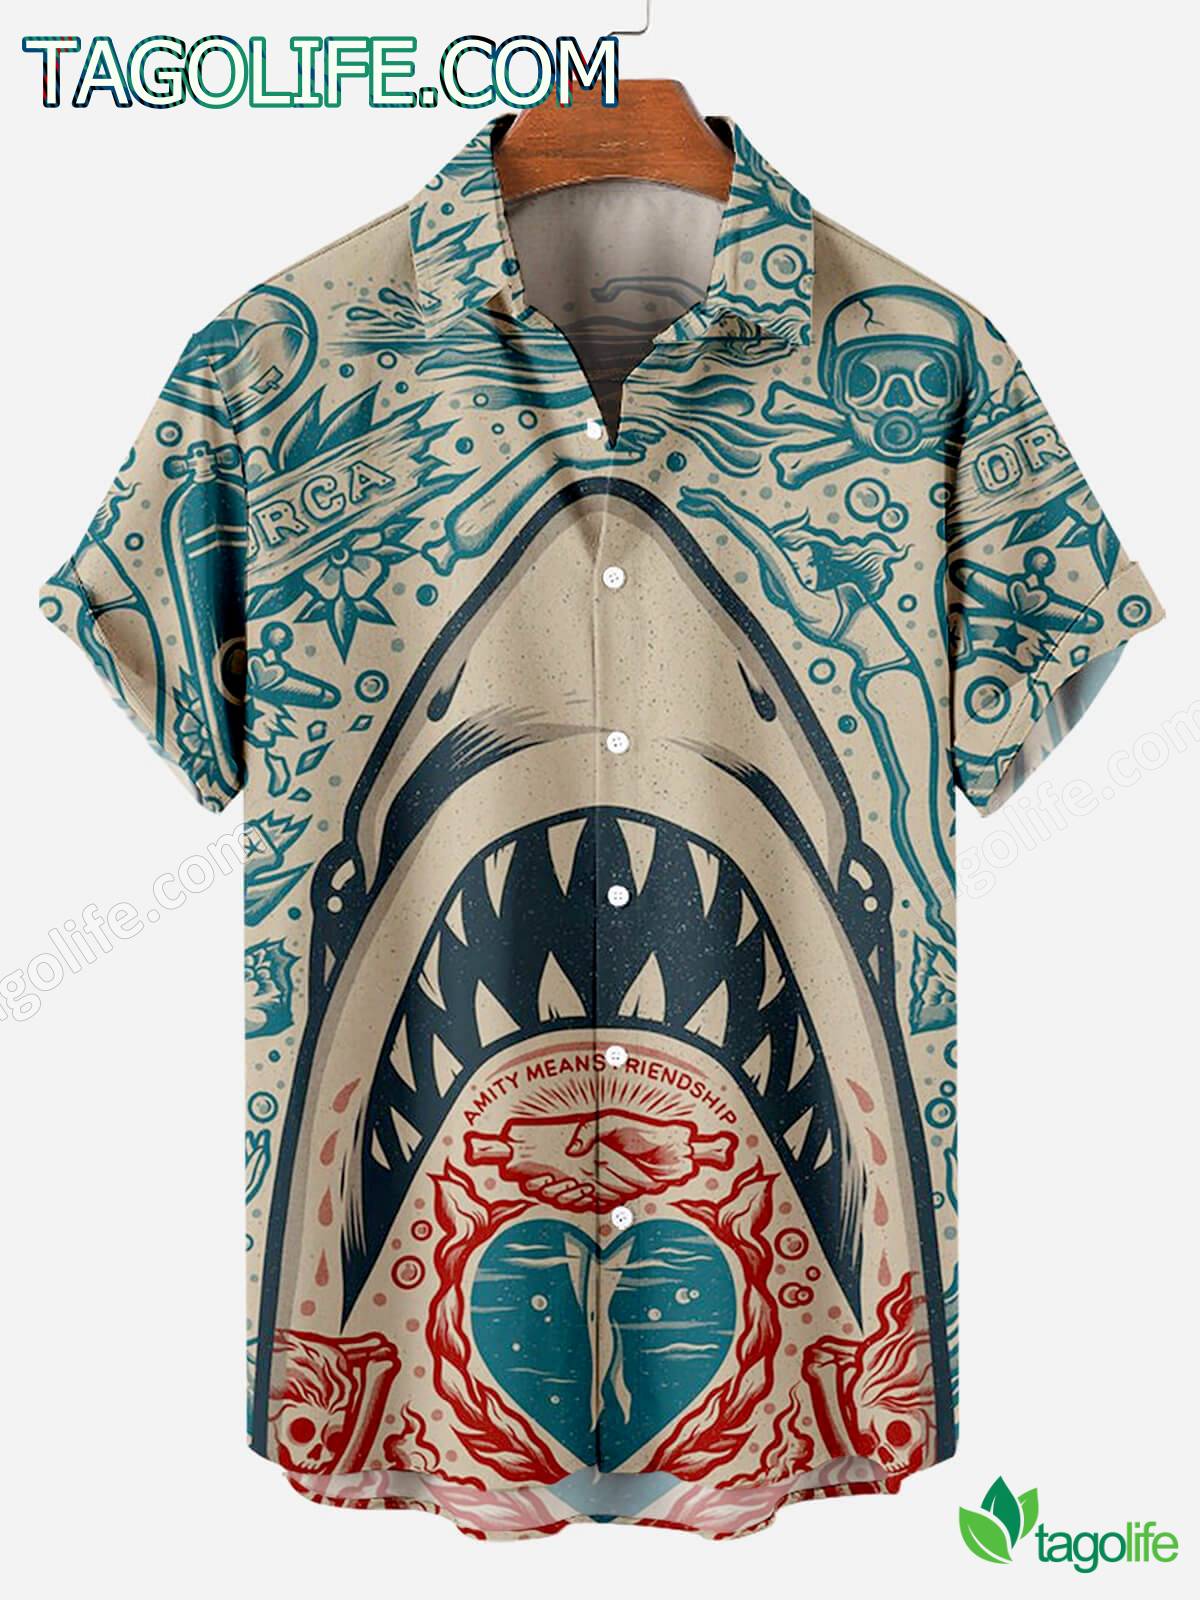 Shark Amity Means Friendship Hawaiian Shirt